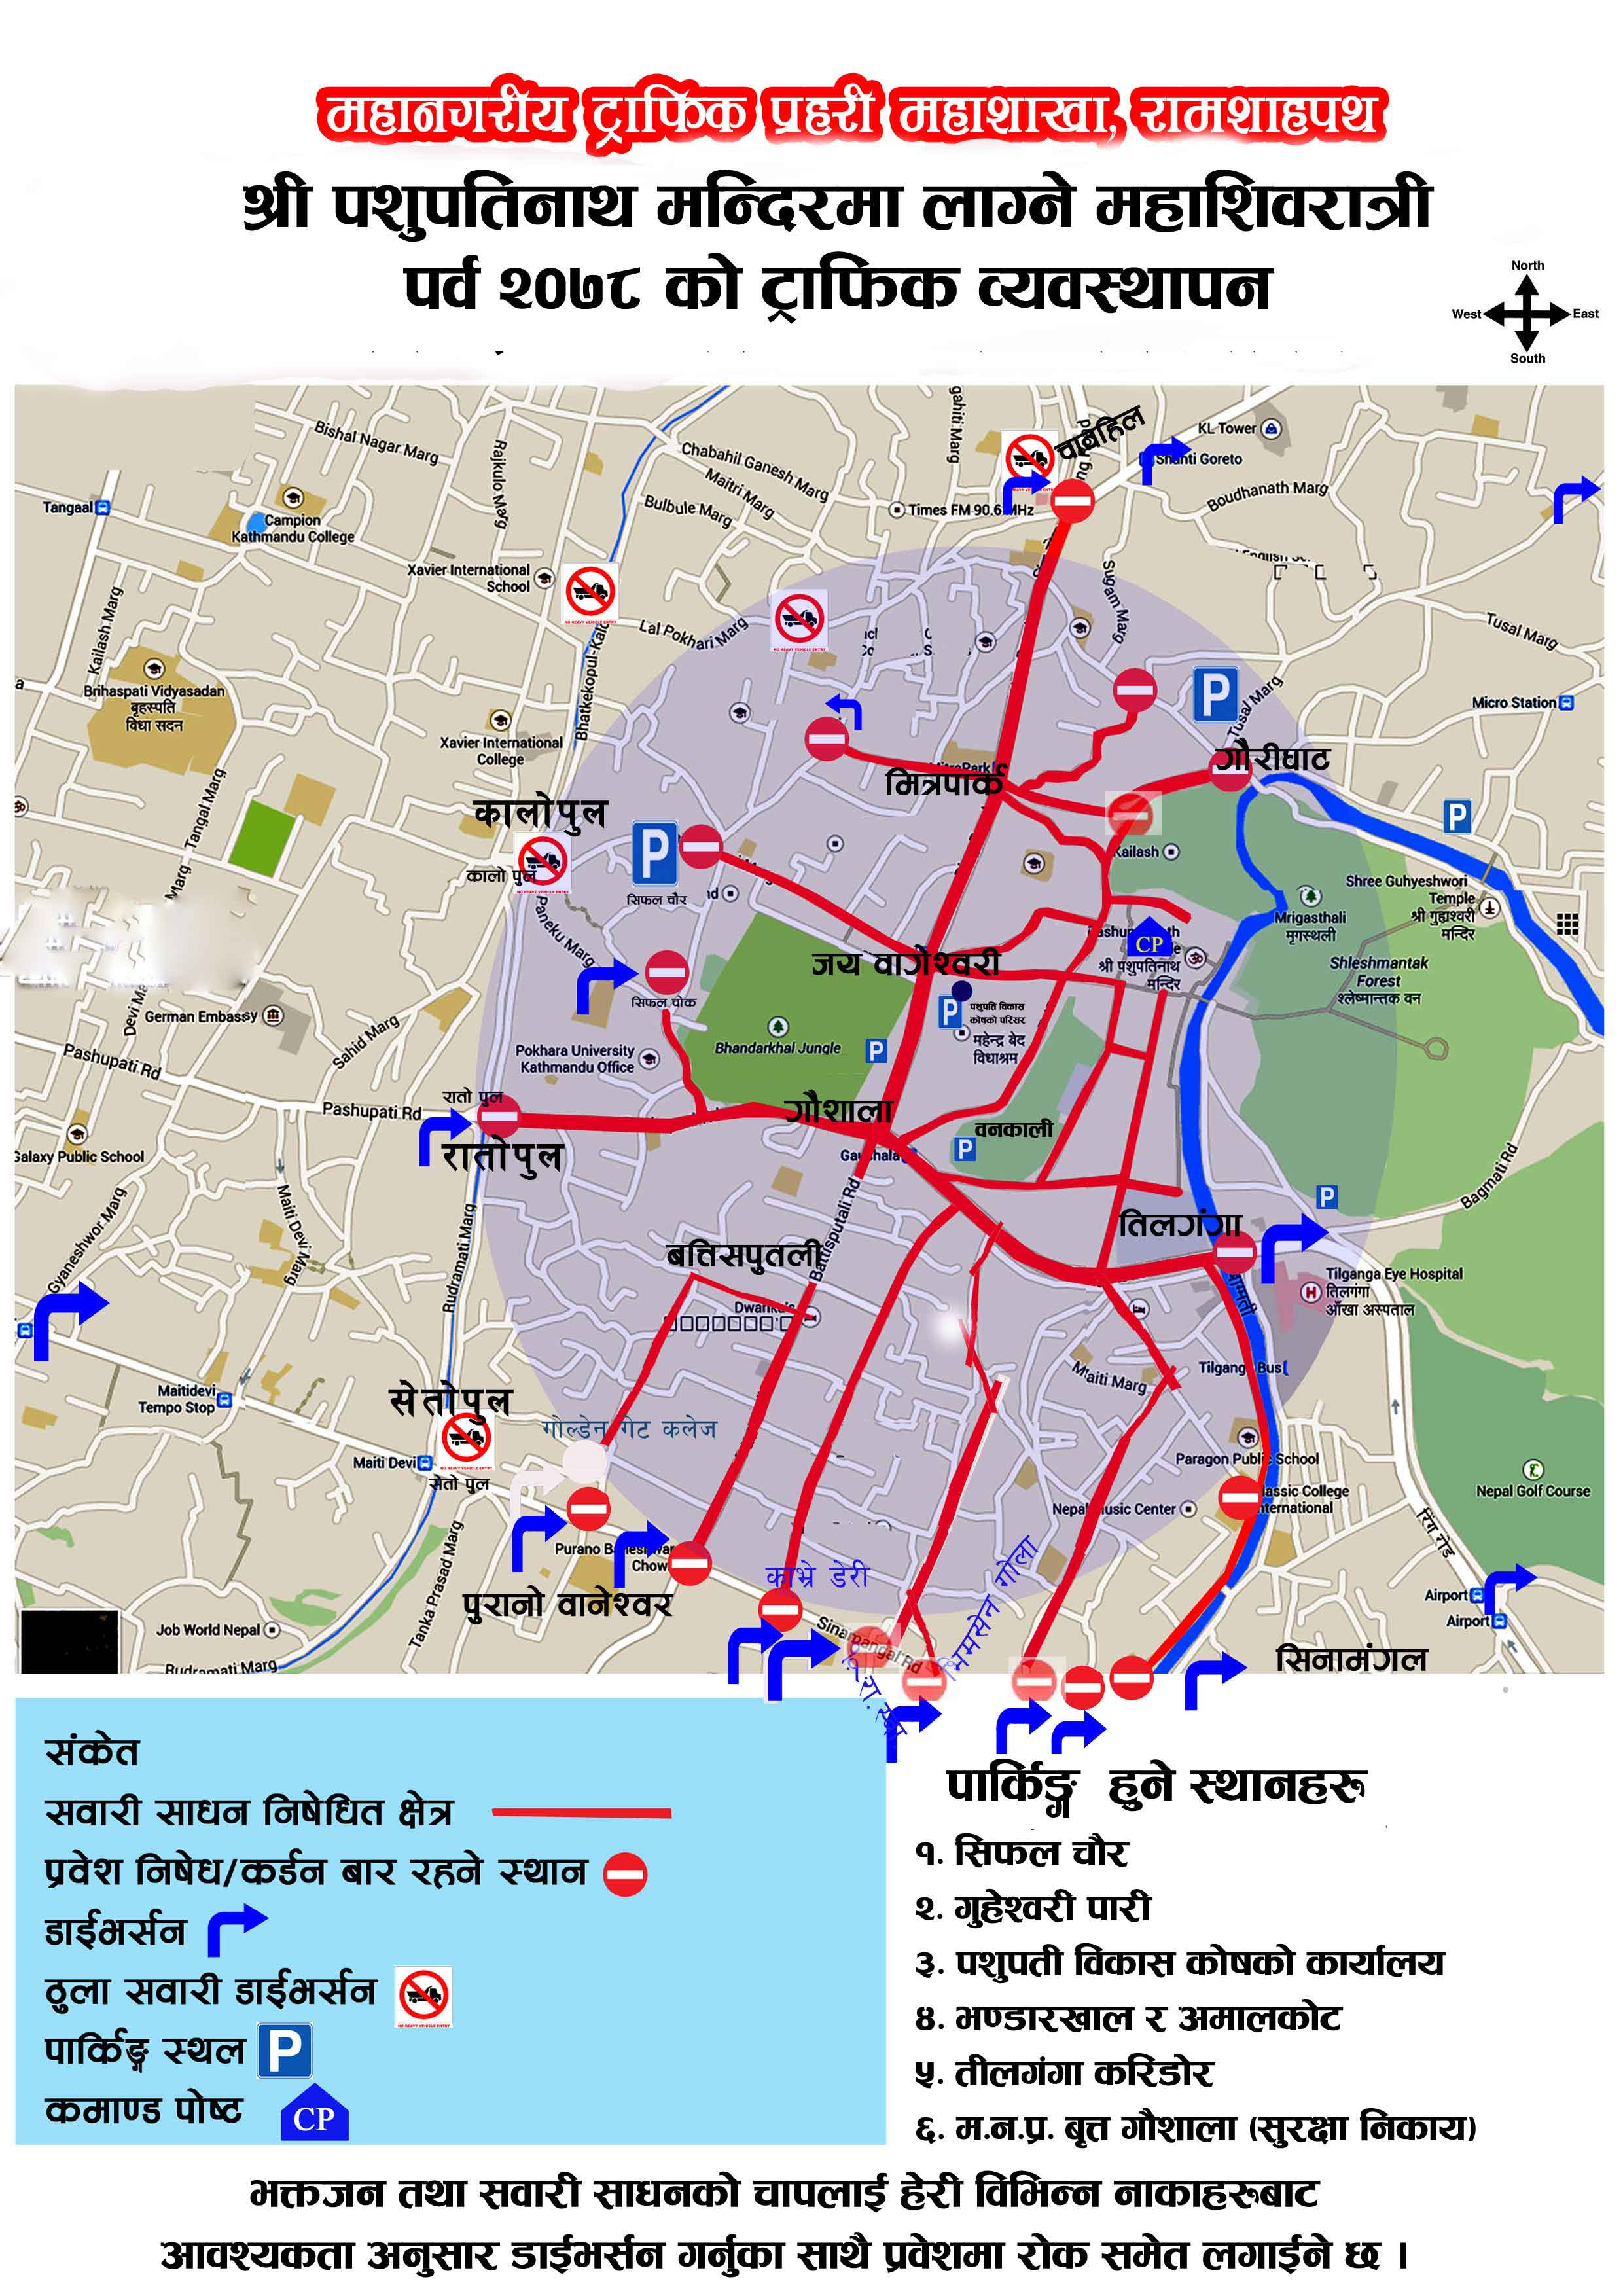 Special Traffic Plan for Mahashivaratri